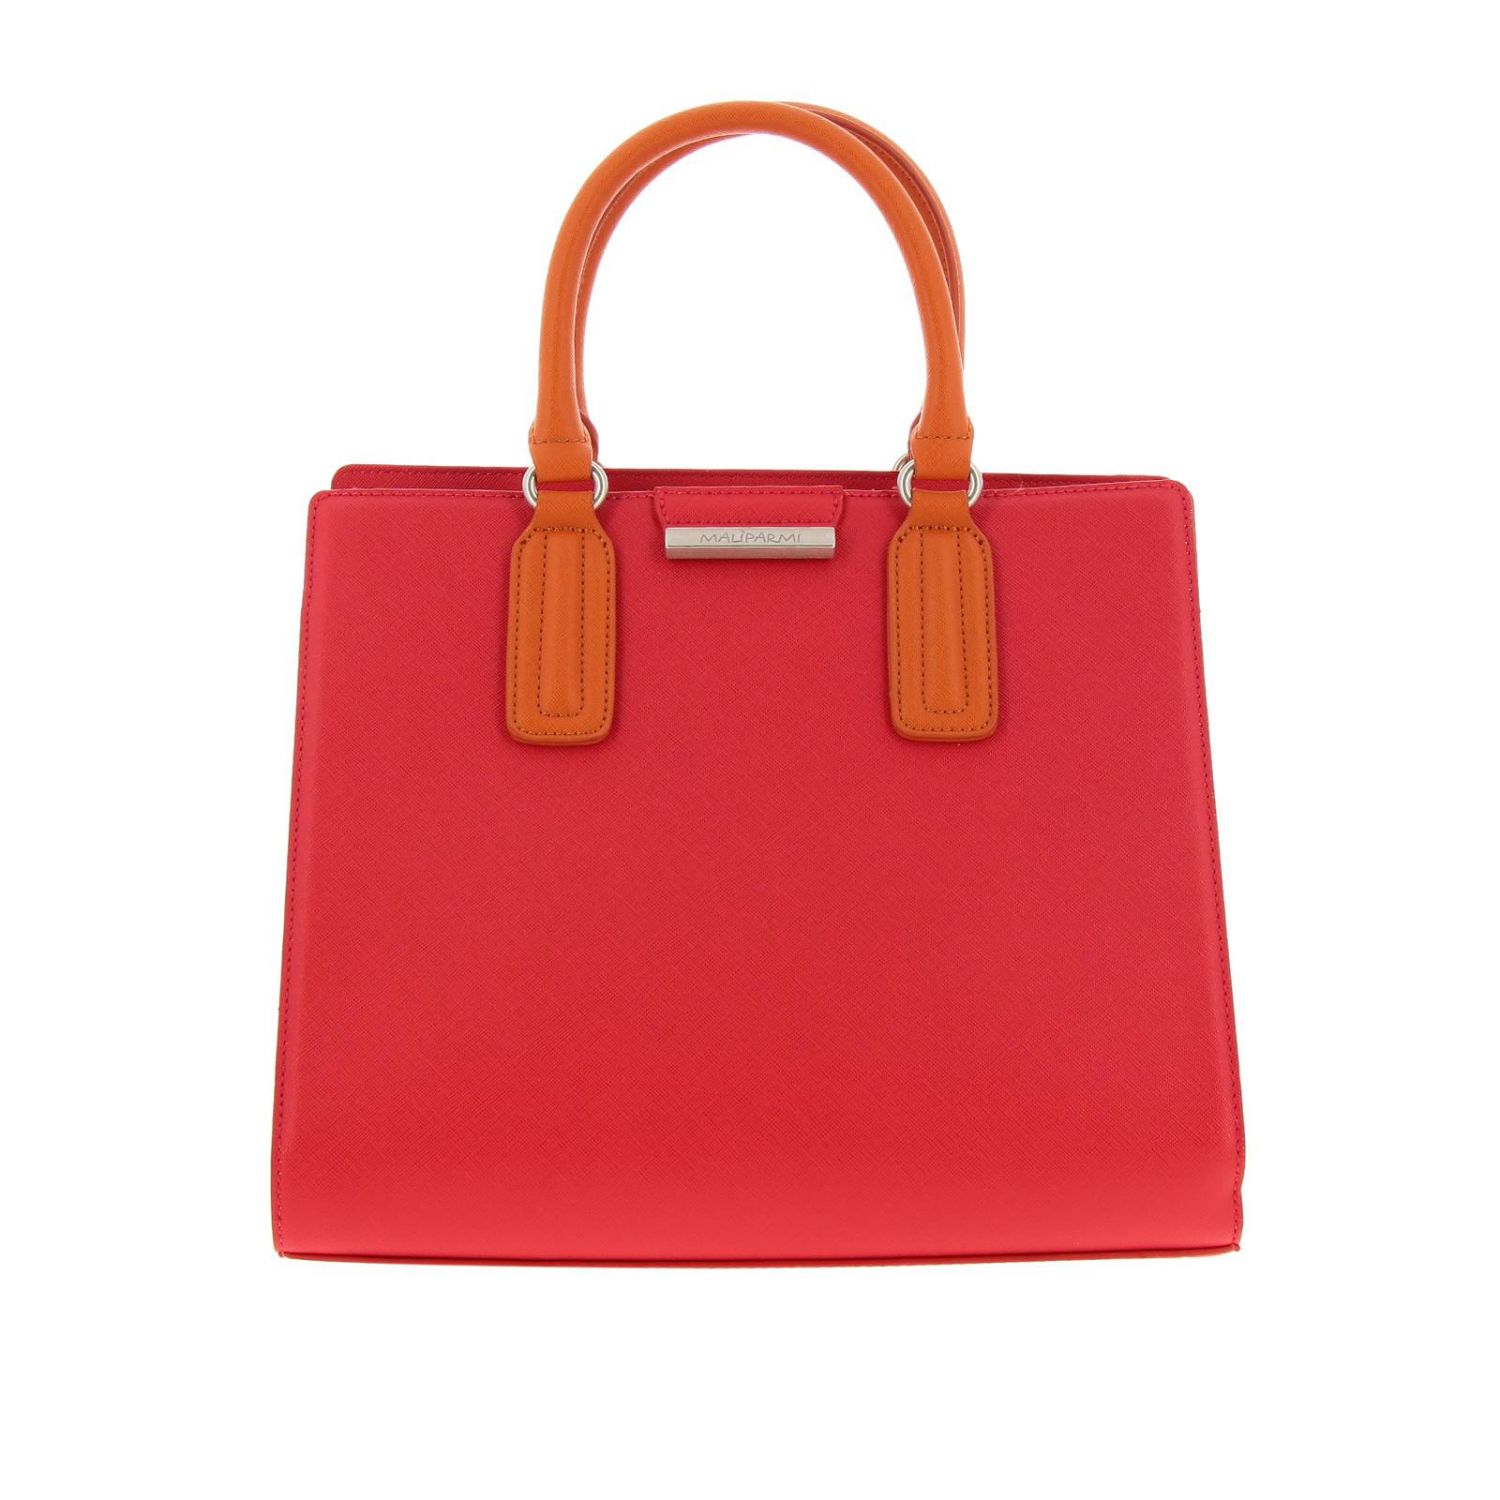 Maliparmi Outlet: handbag for woman - Red | Maliparmi handbag BH0209 ...